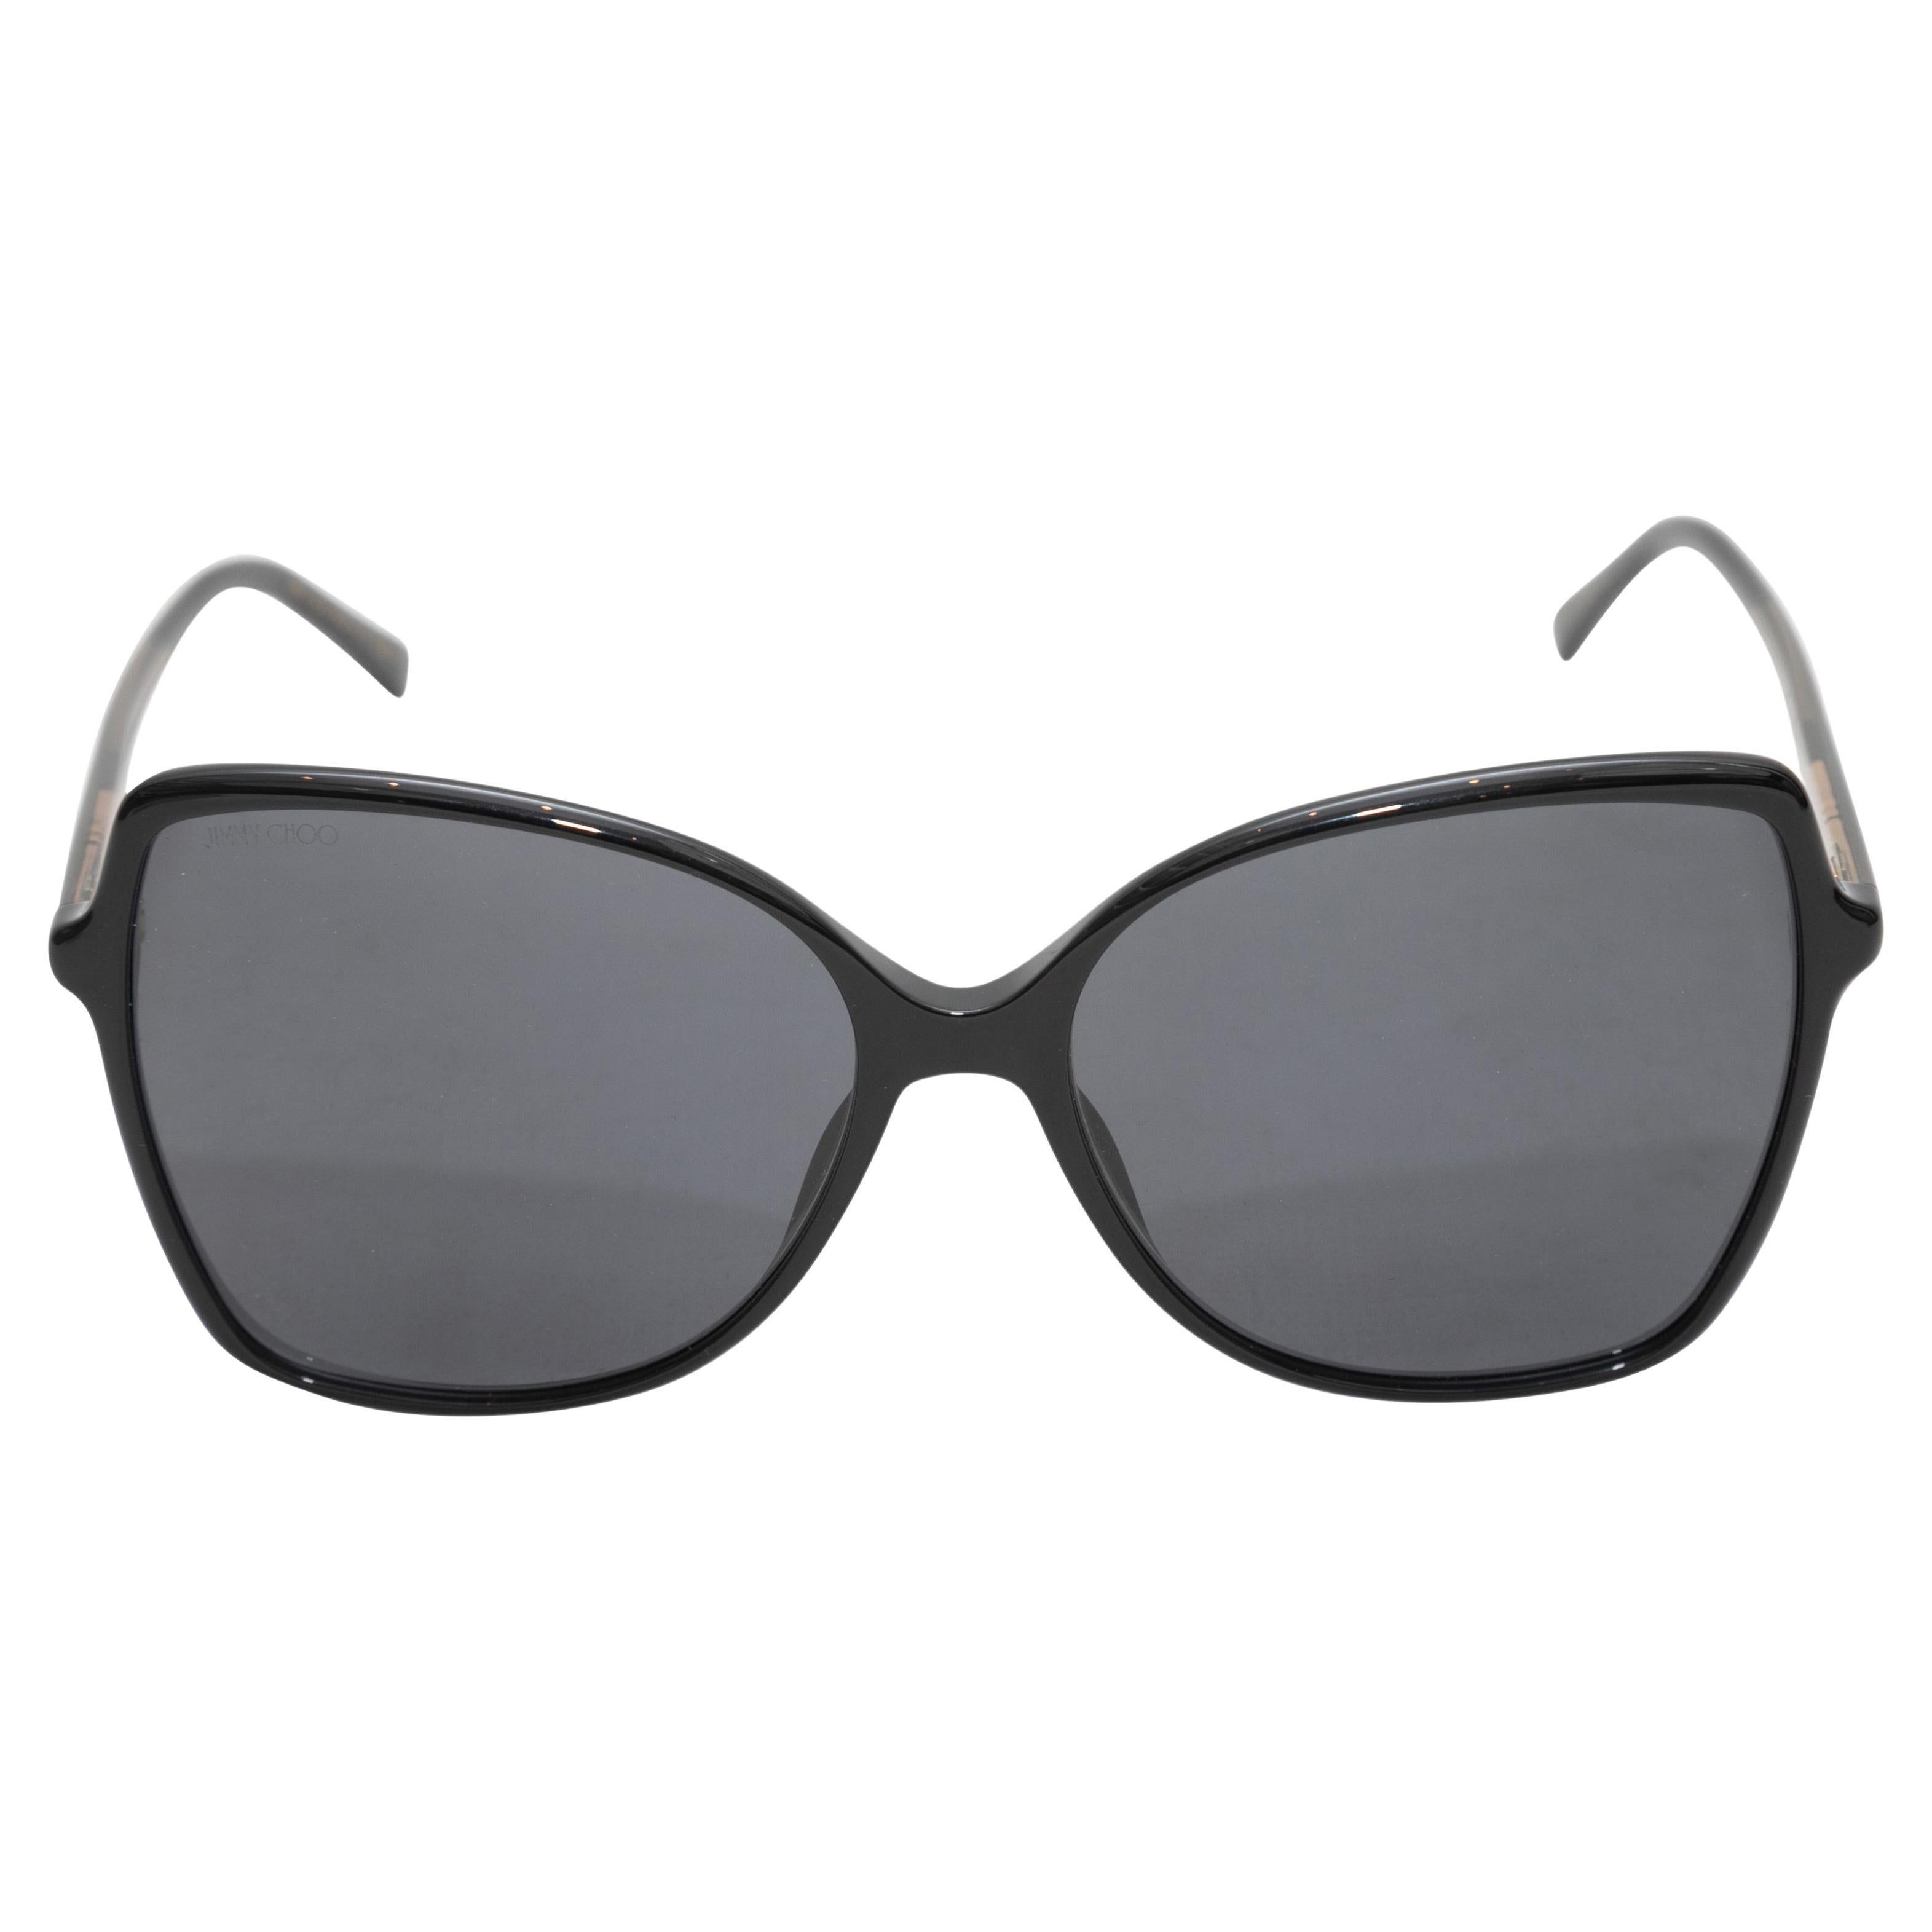 Black Jimmy Choo Oversized Sunglasses For Sale